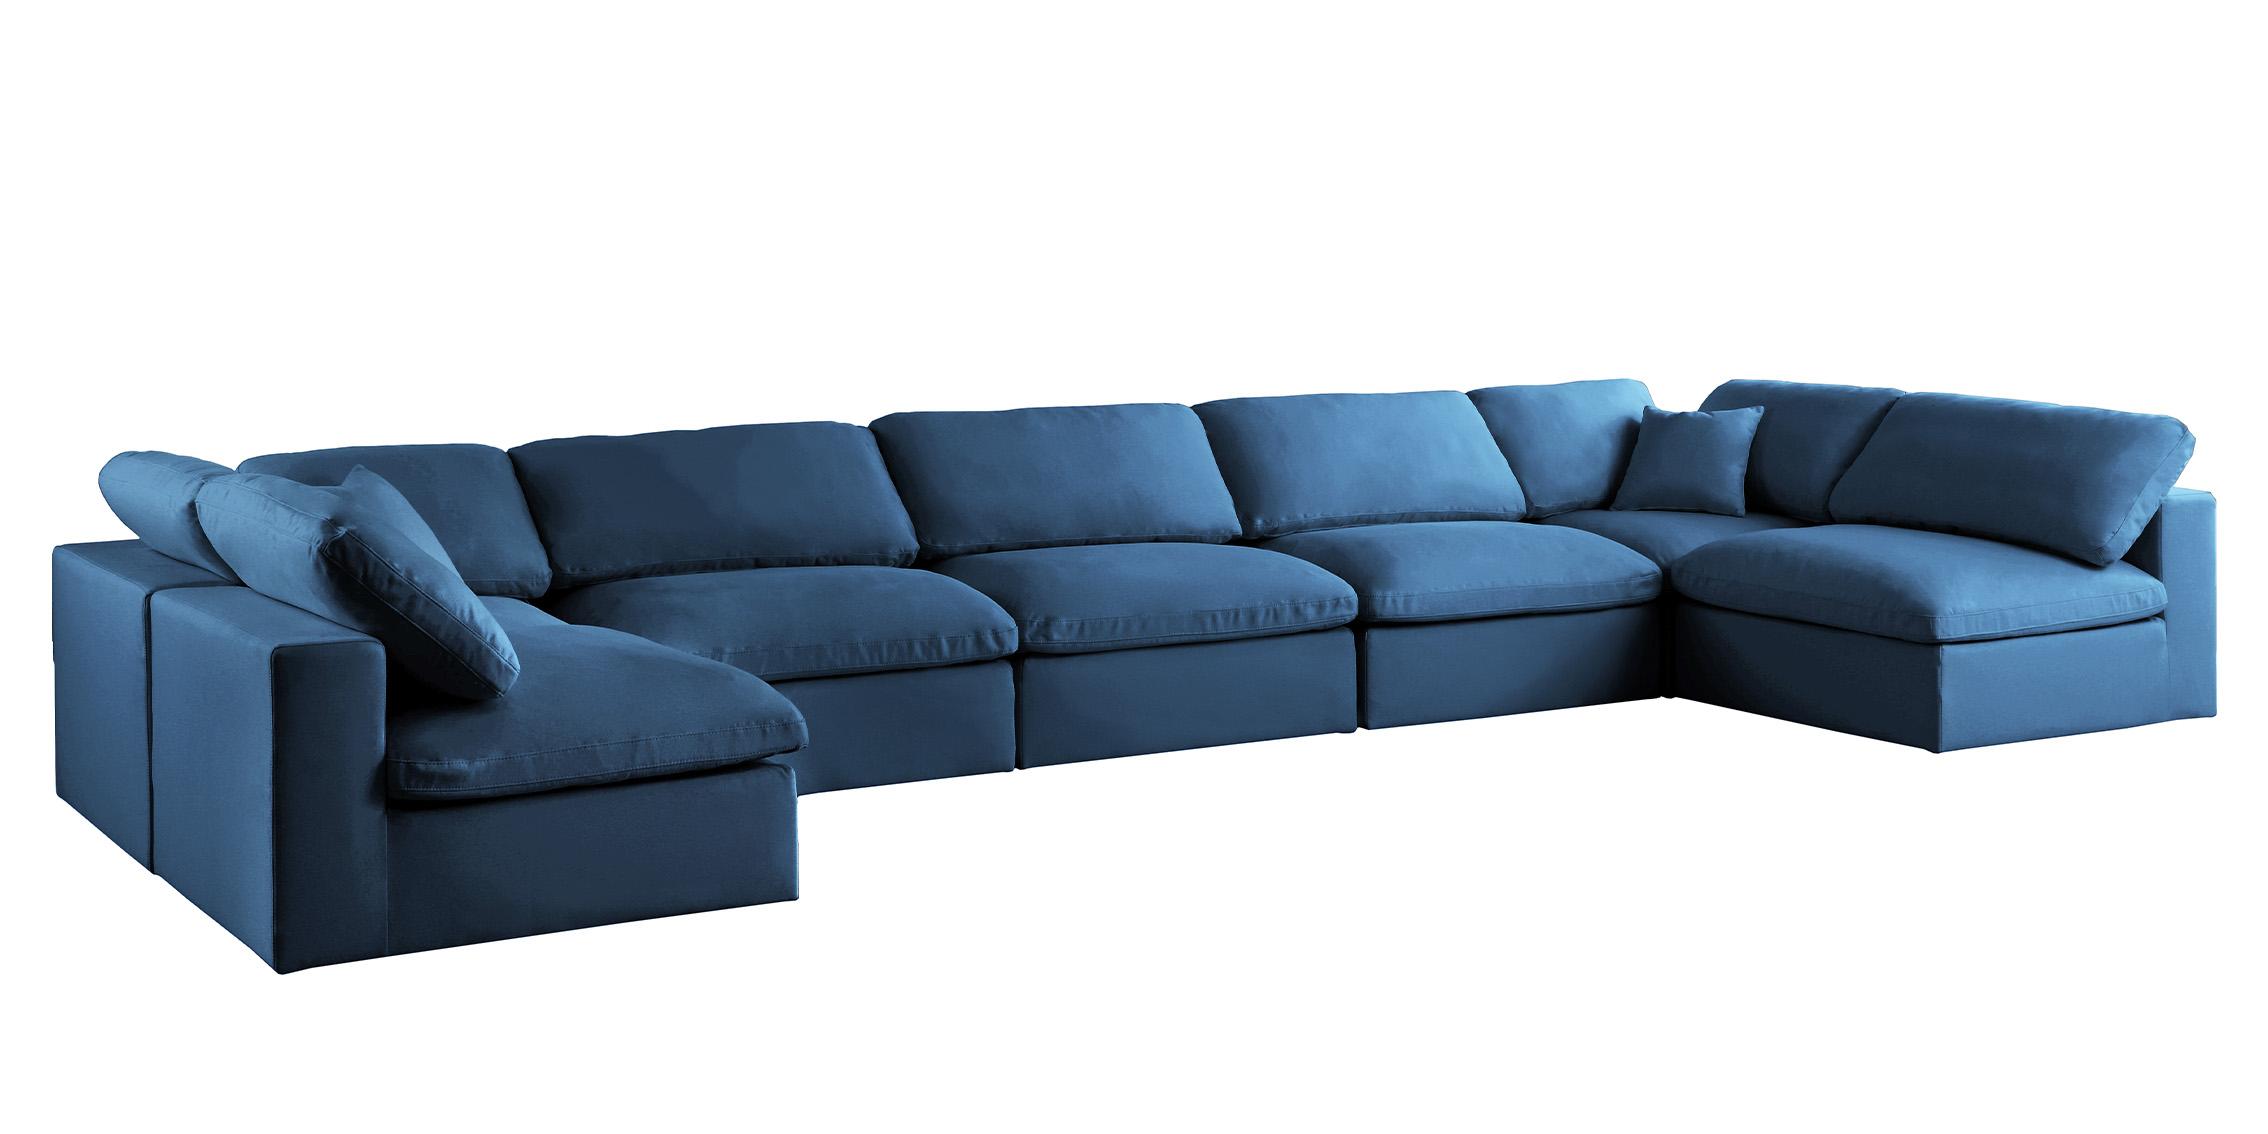 Contemporary, Modern Modular Sectional Sofa 602Navy-Sec7B 602Navy-Sec7B in Navy Fabric